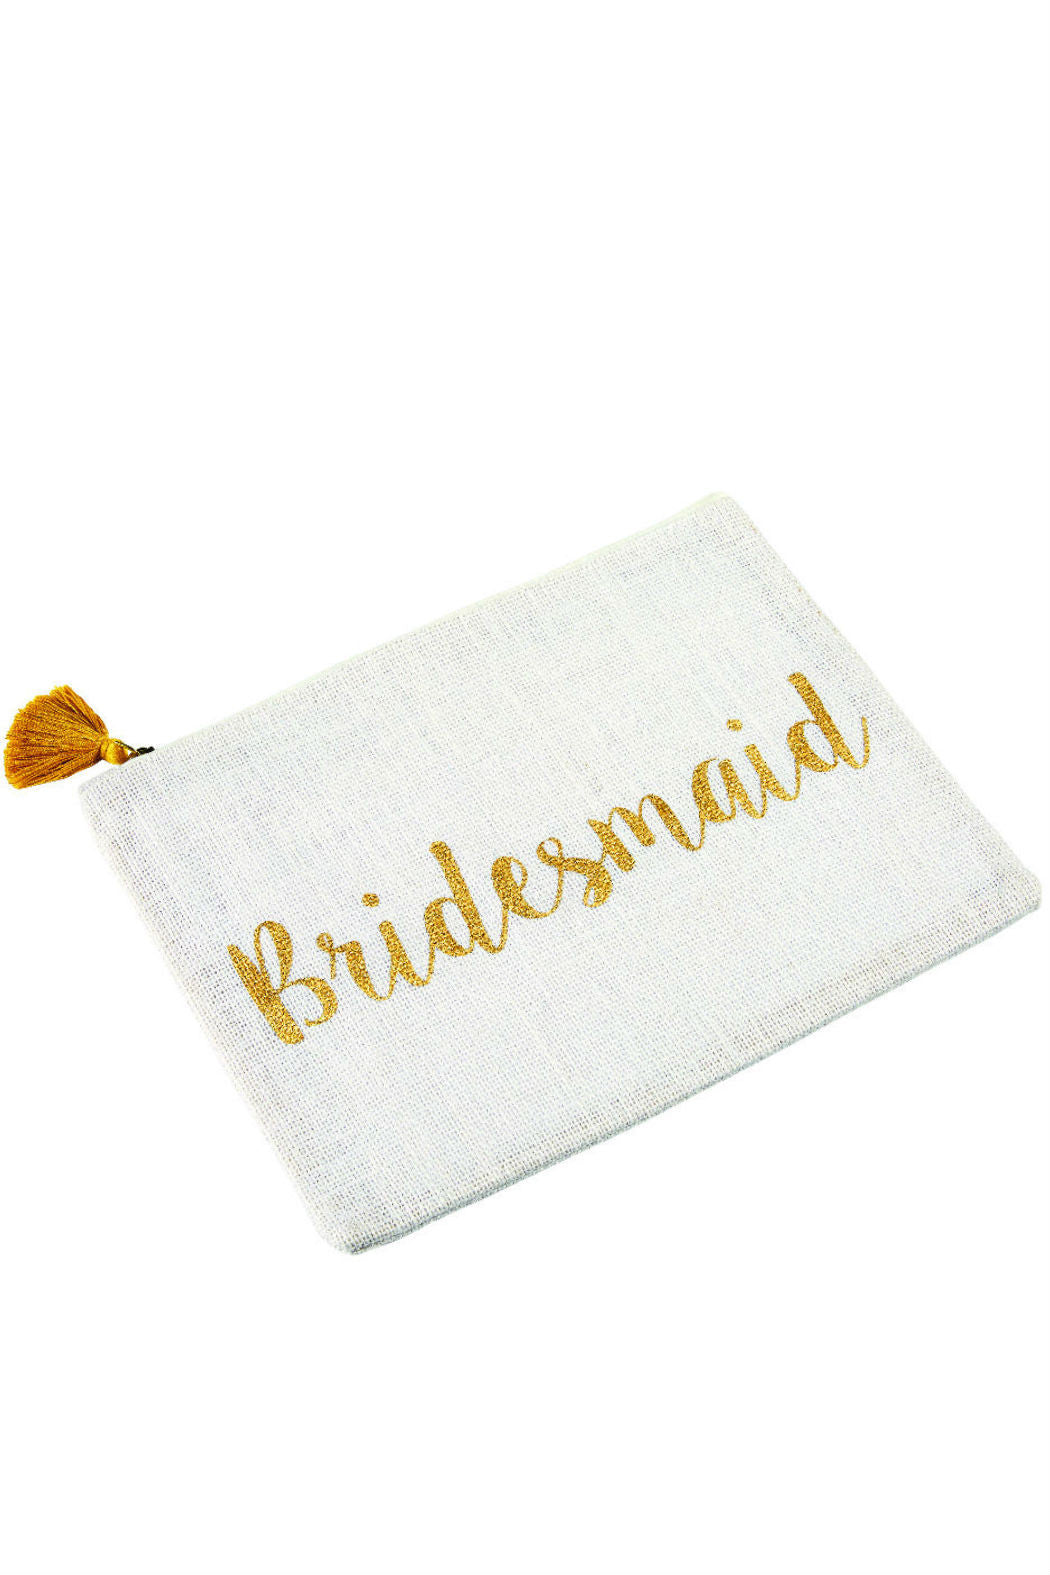 Bridesmaid Carry All Case, bridesmaid gift, bridesmaid bag, maid of honor, wedding, cute wedding - New Orientation - 2